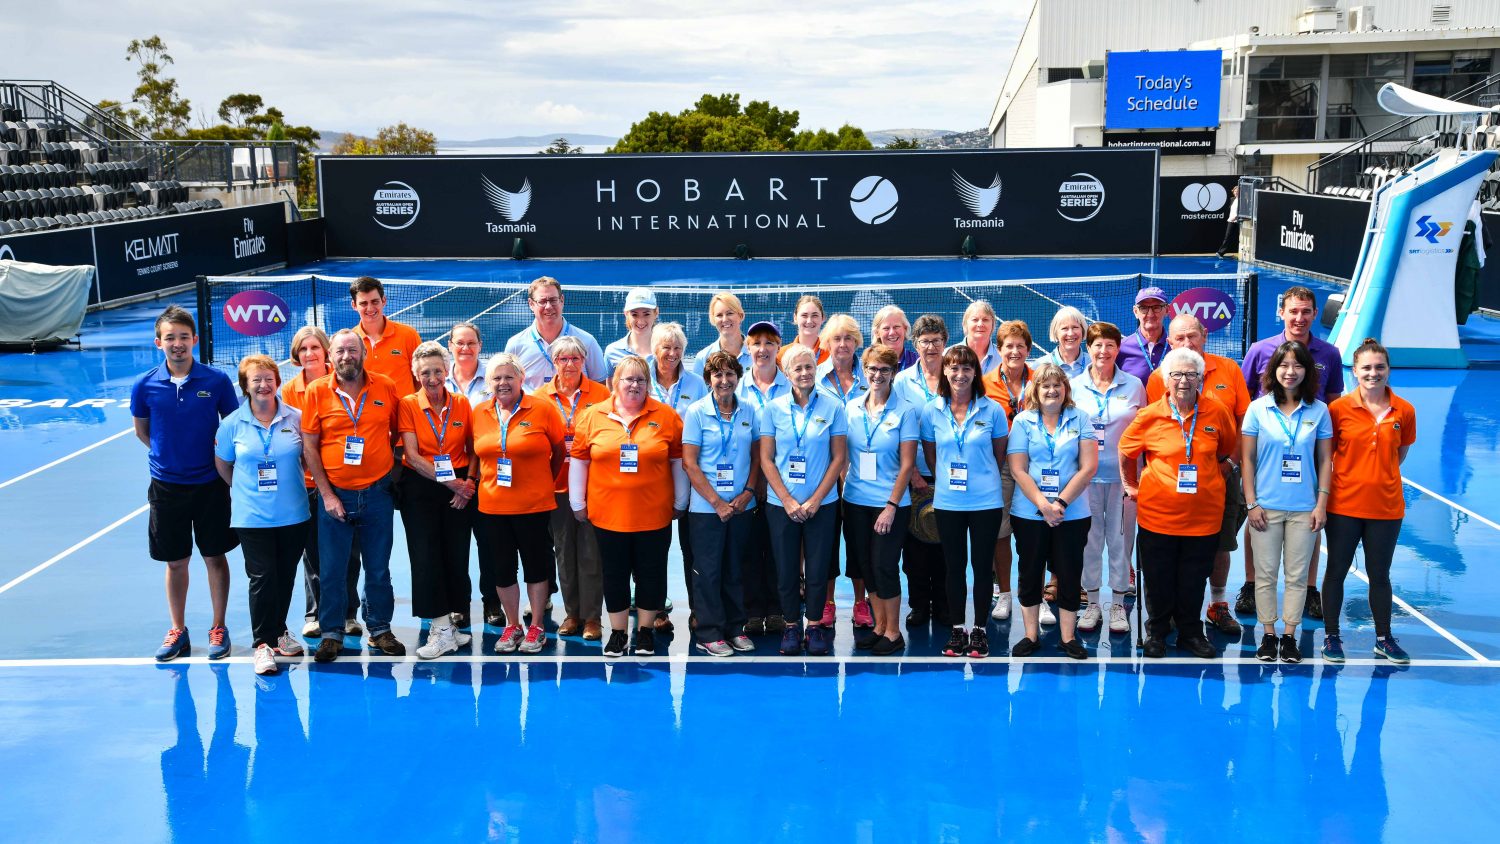 Volunteer at Hobart International 2019 Hobart International Tennis